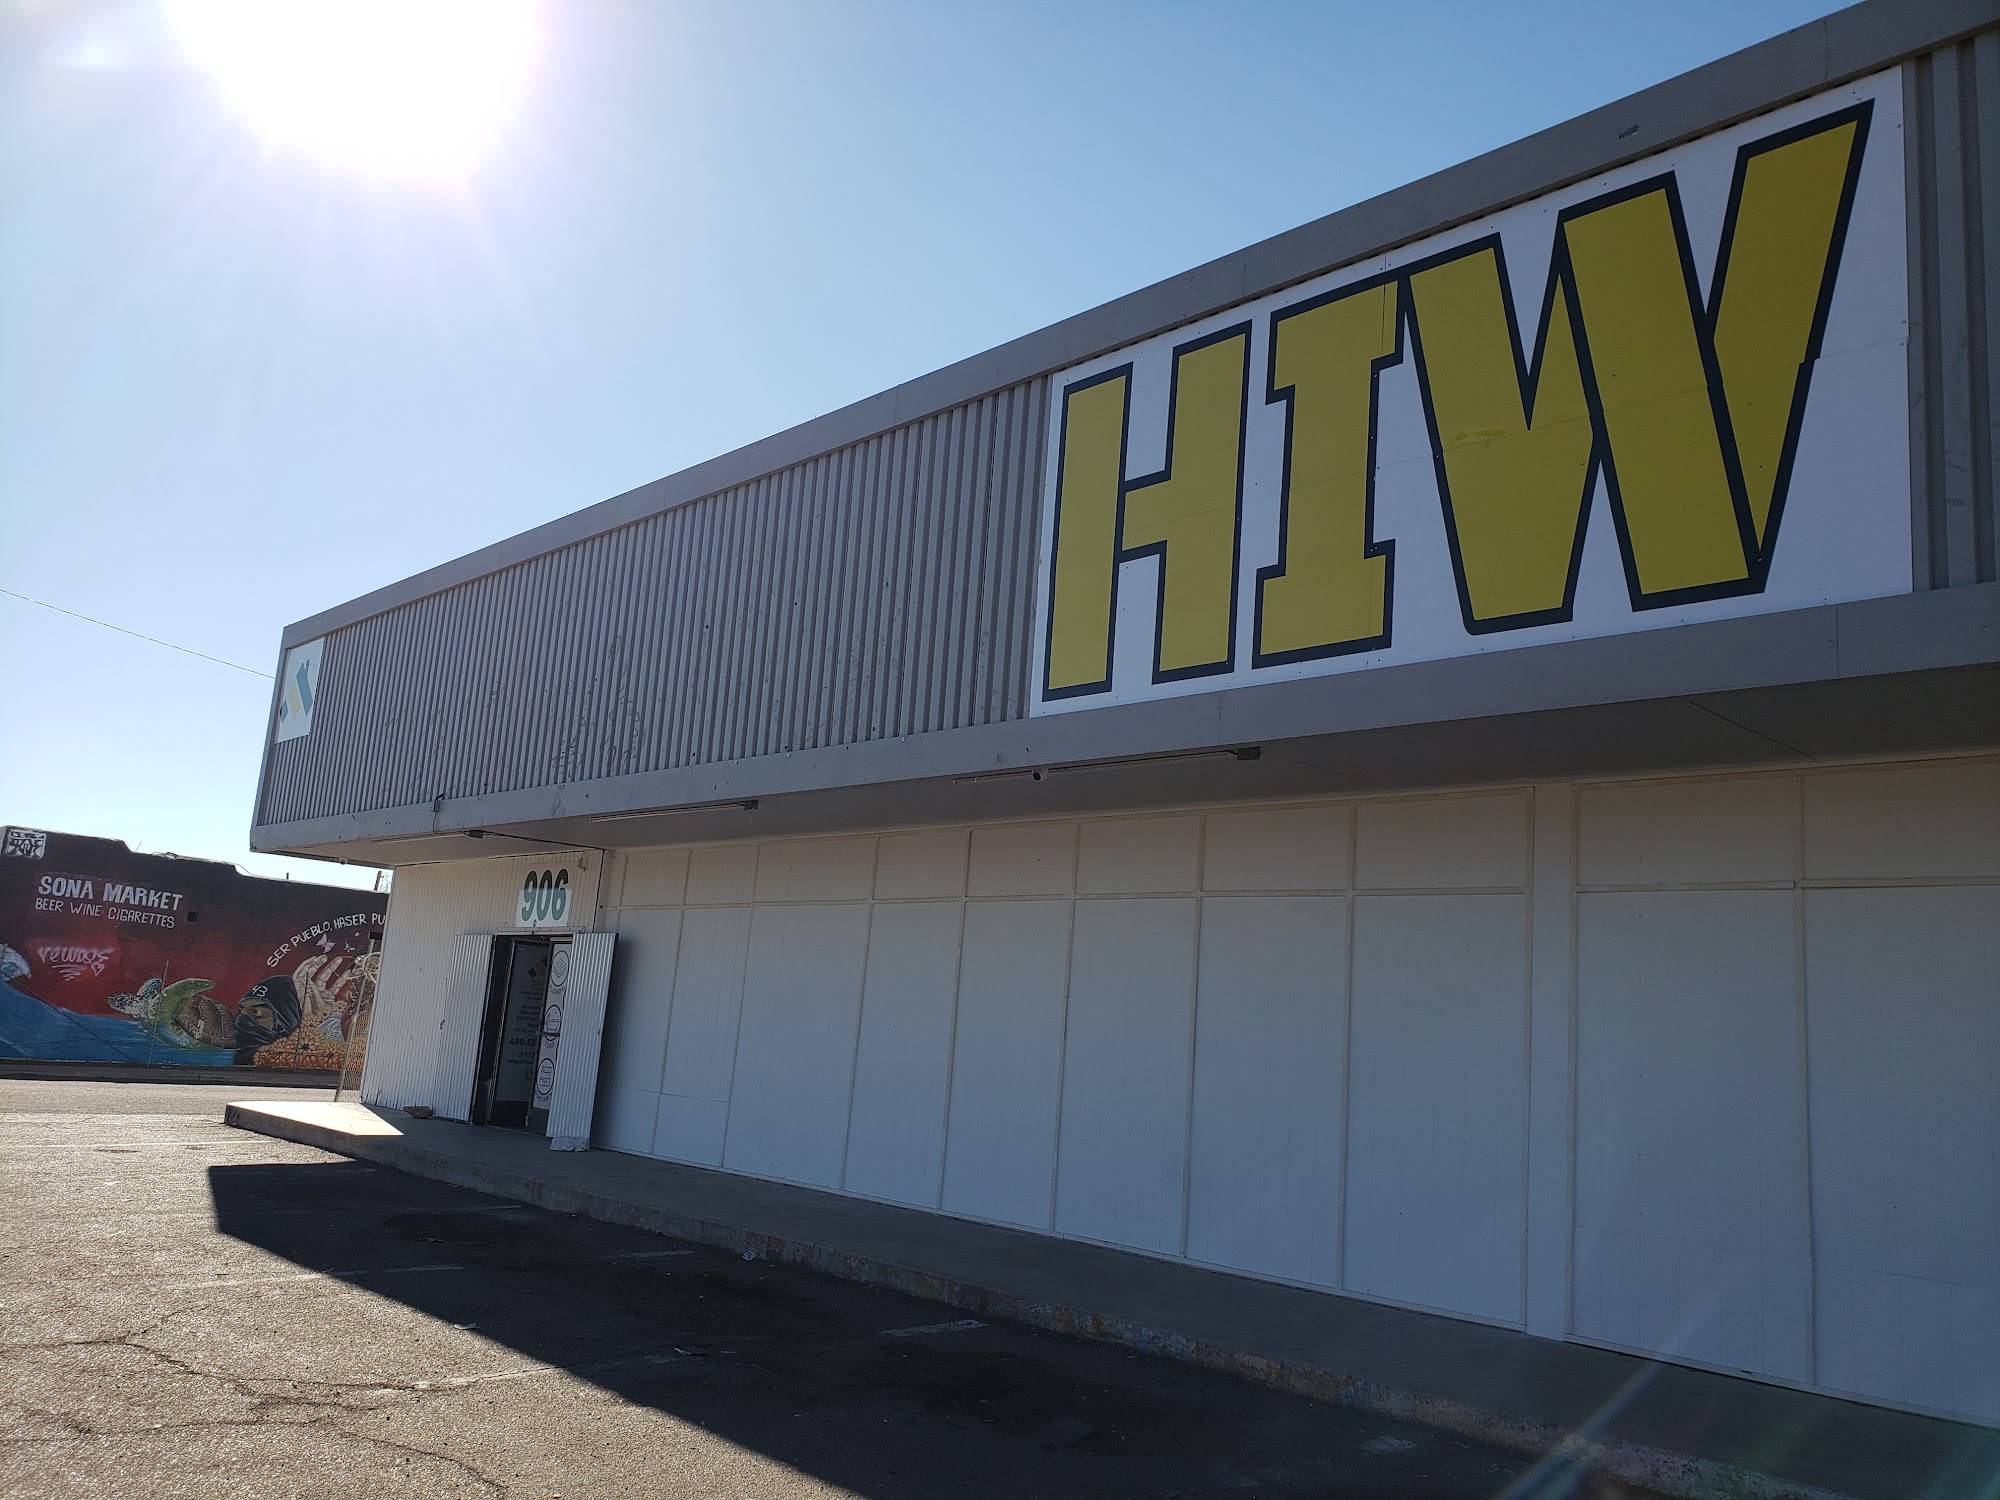 (HIW) Home Improvement Warehouse